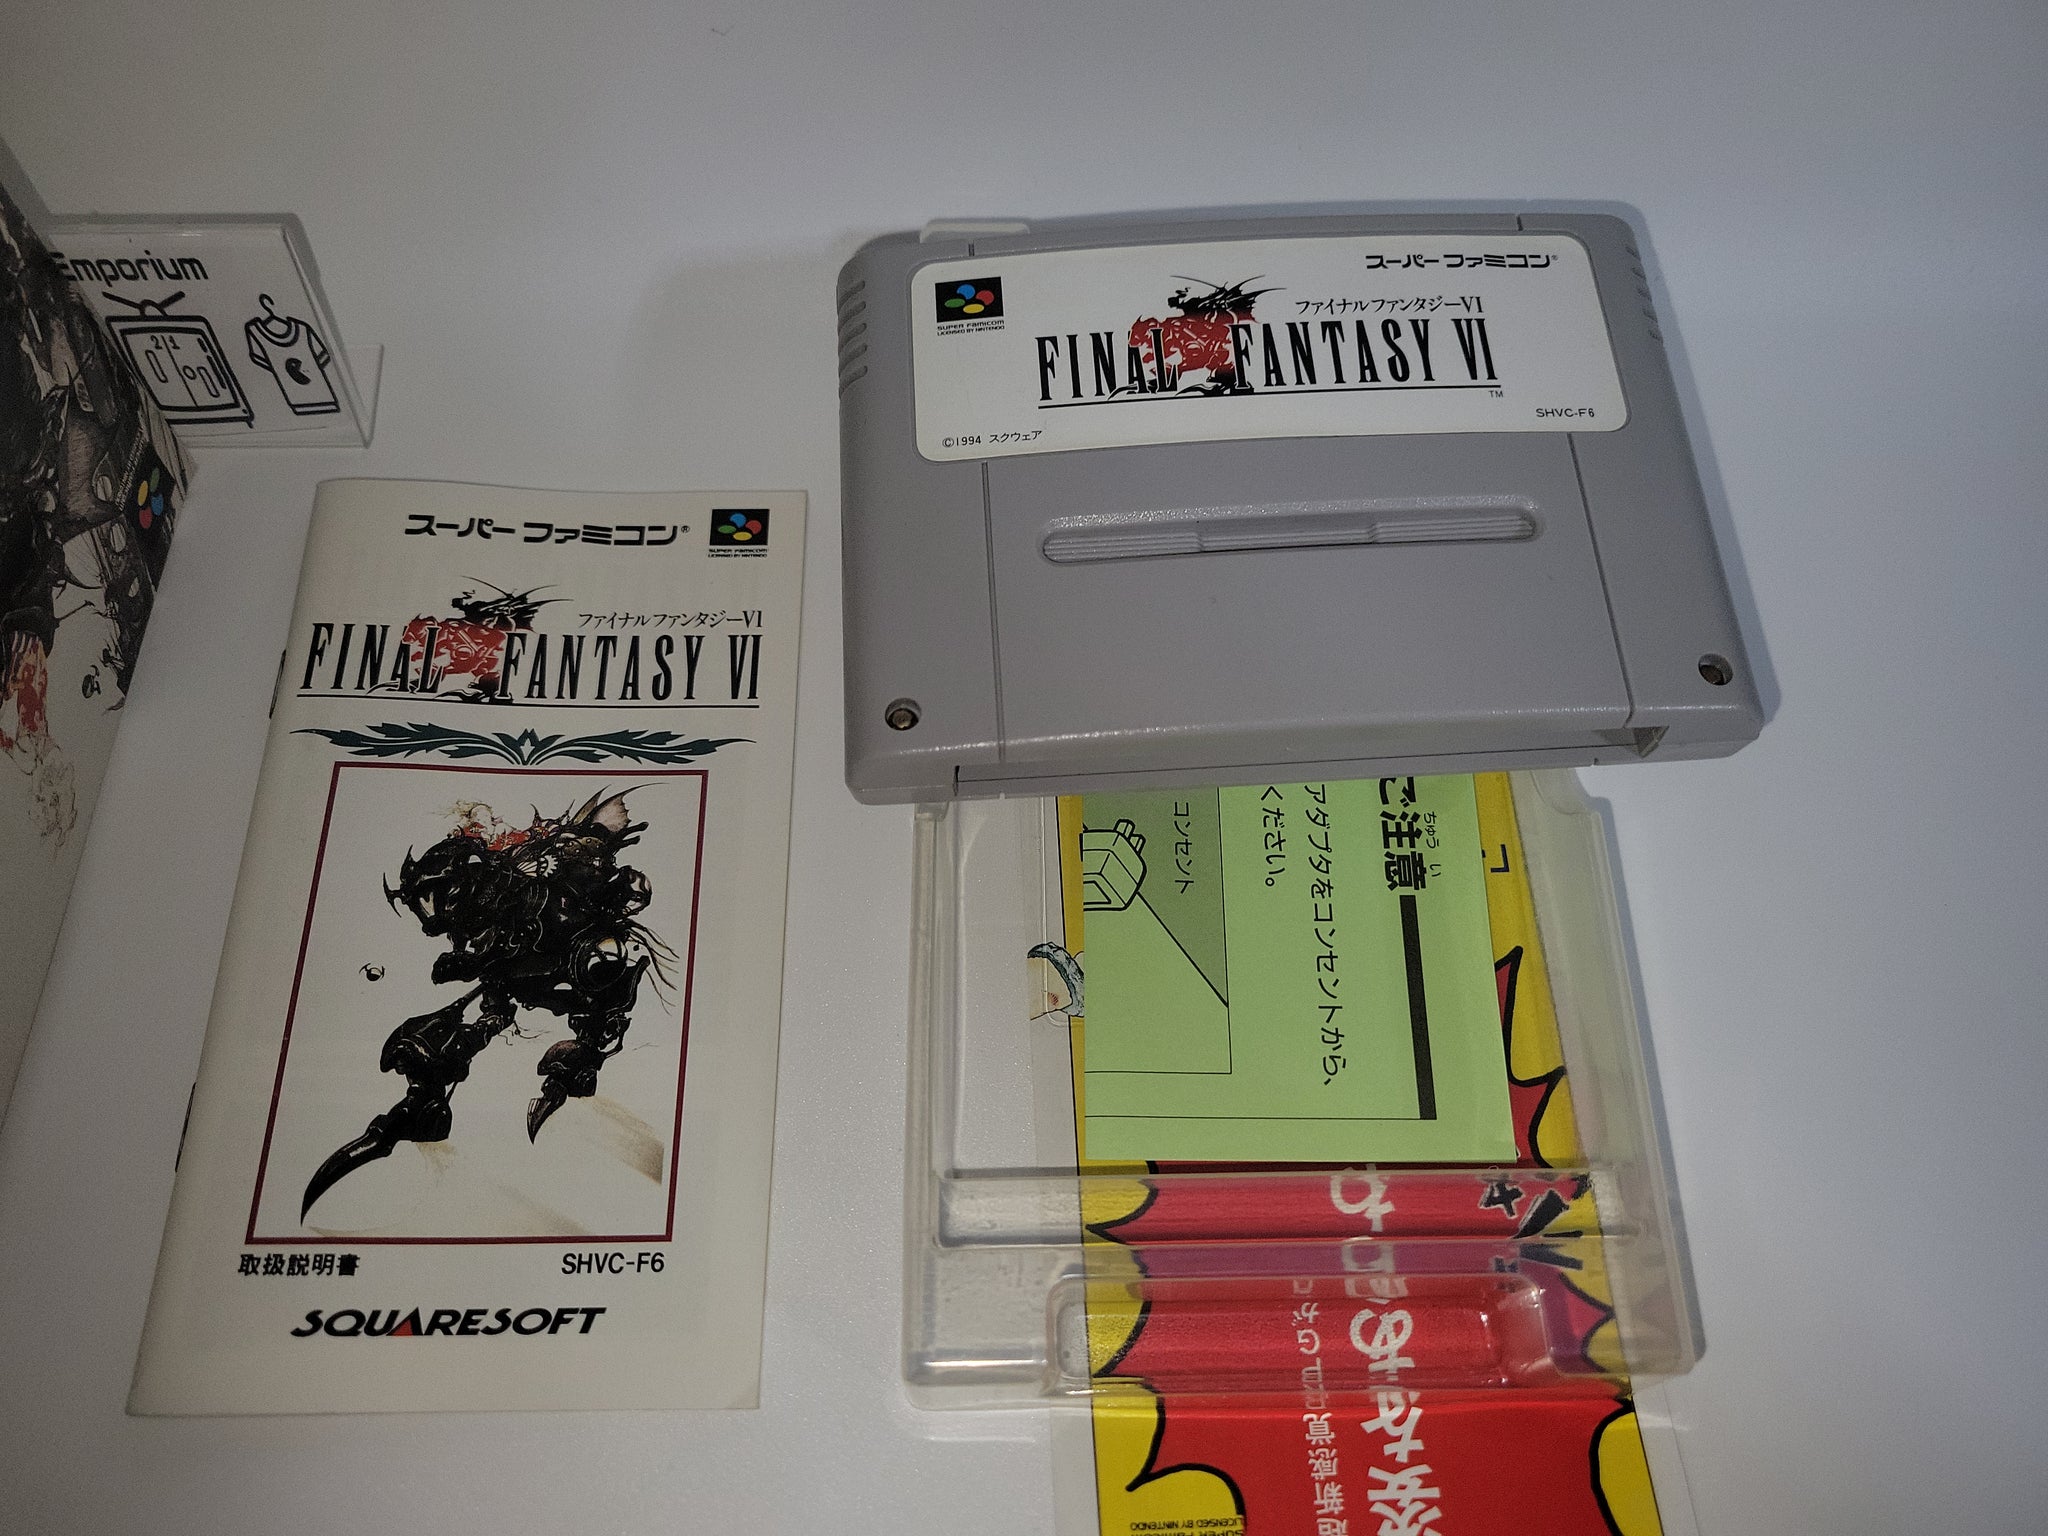 Final Fantasy VI (Super Nintendo Entertainment System, 1994